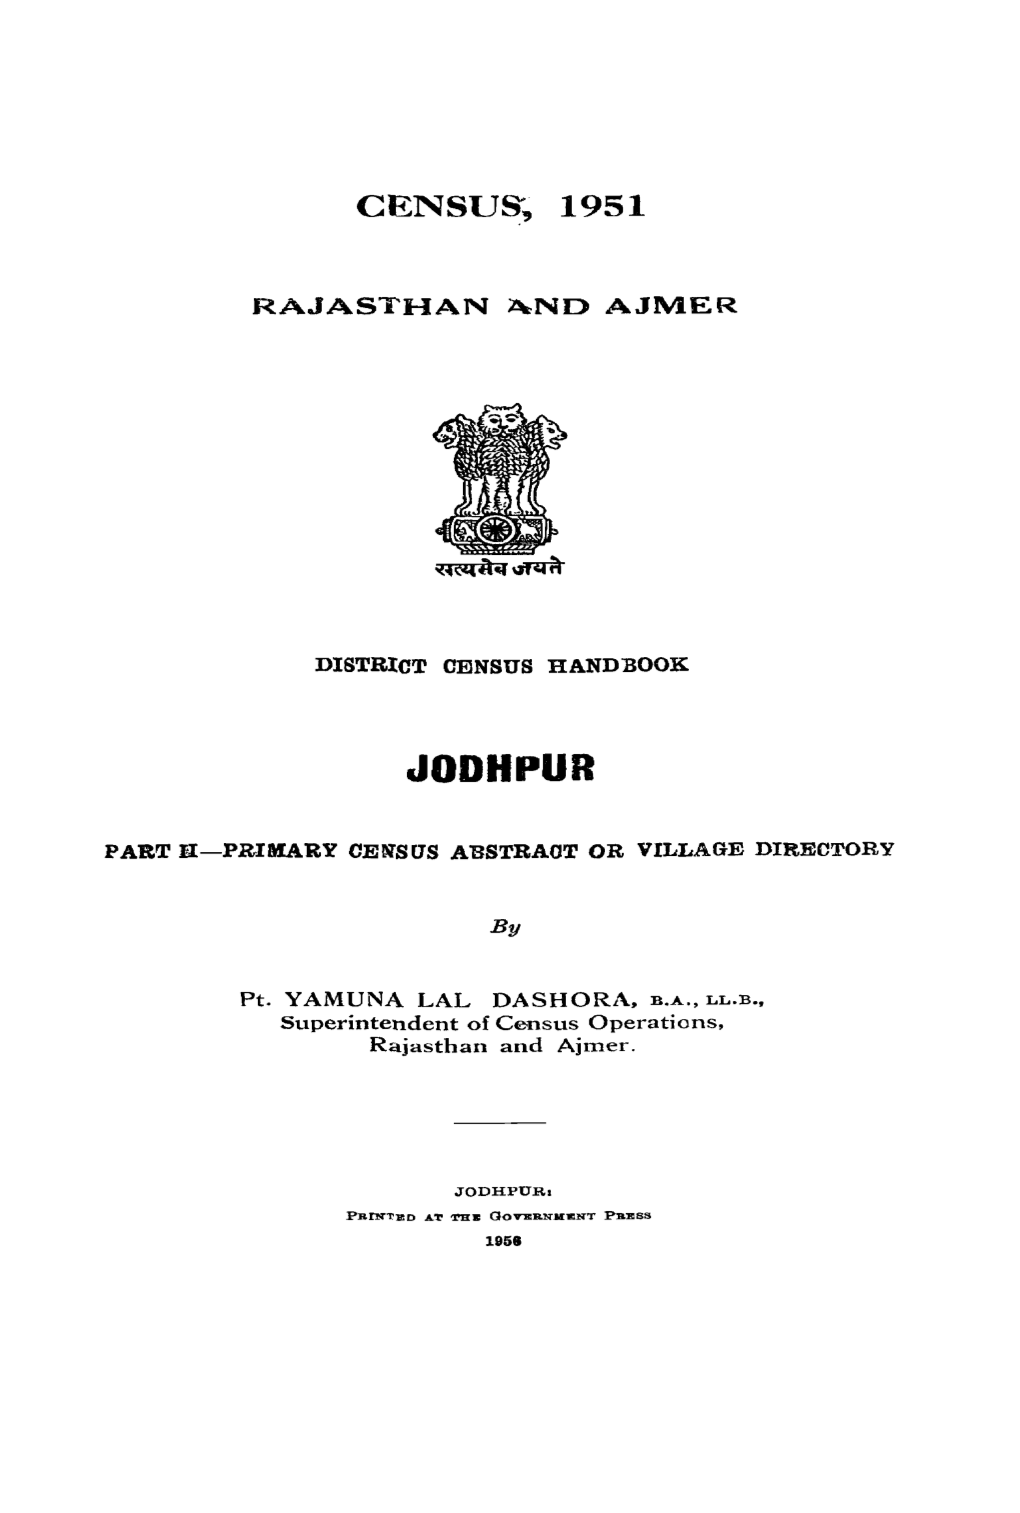 District Census Handbook, Jodhpur, Part II, Rajasthan and Ajmer